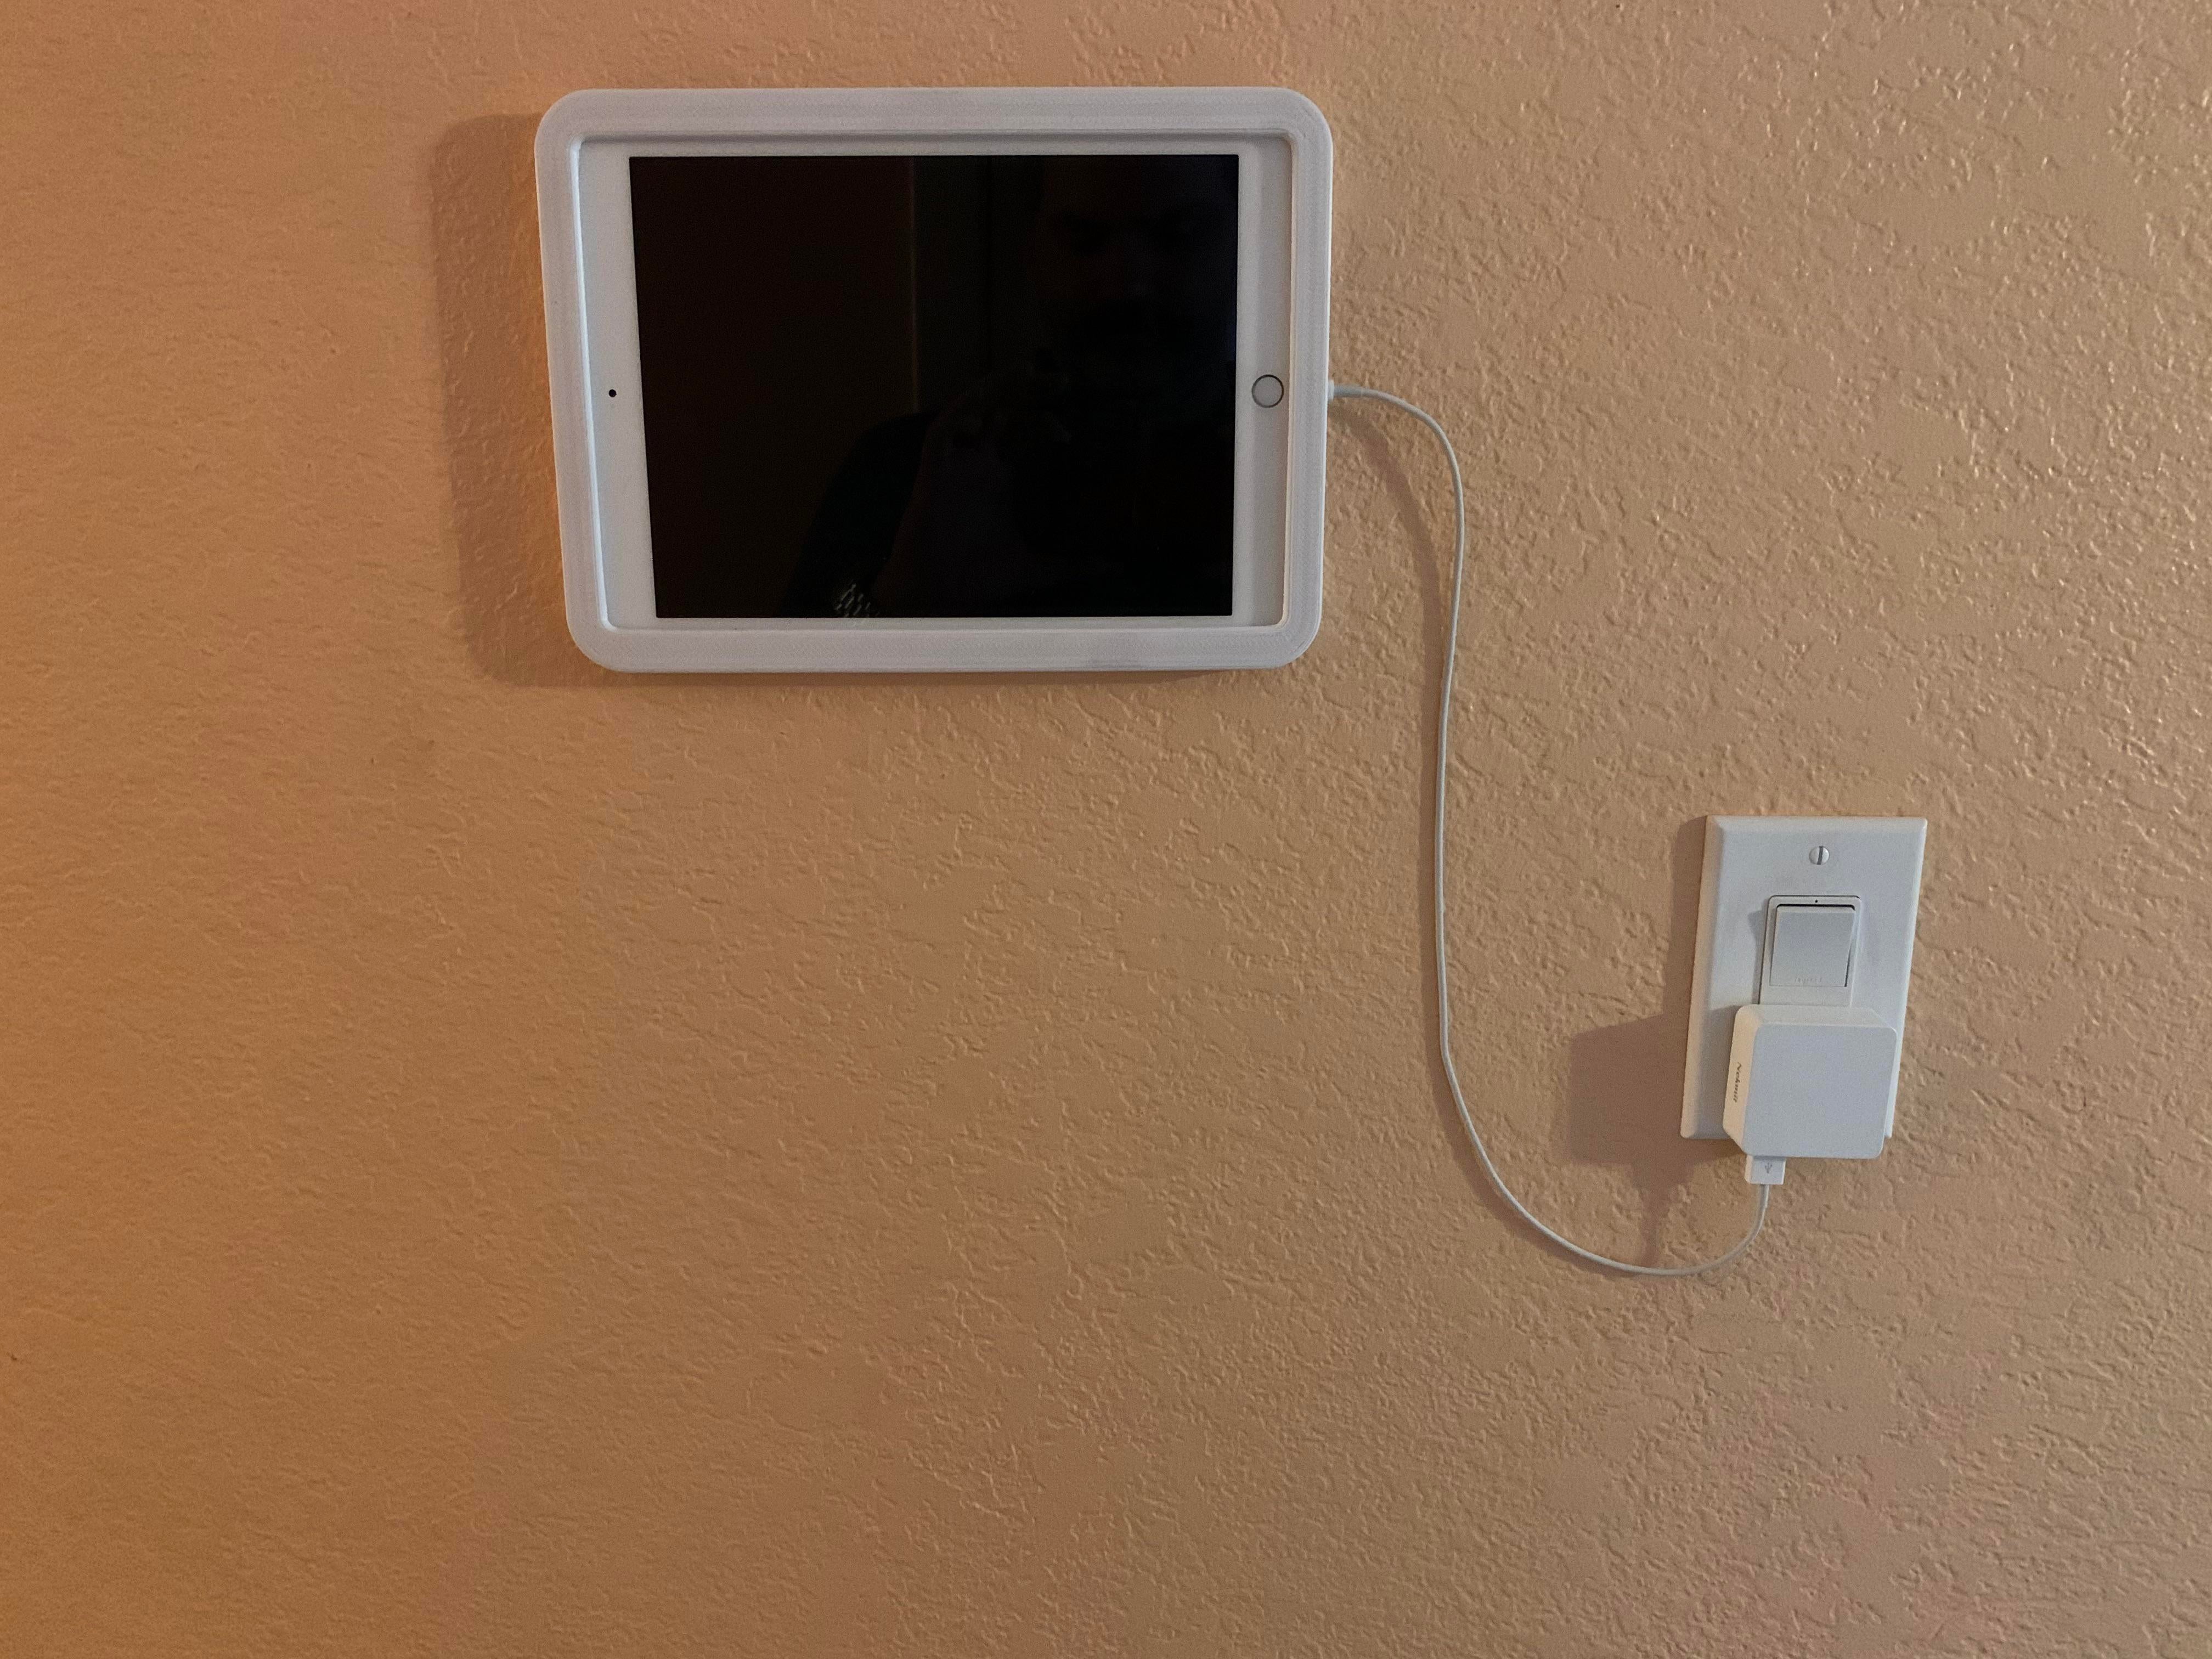 IPad mounted on the wall